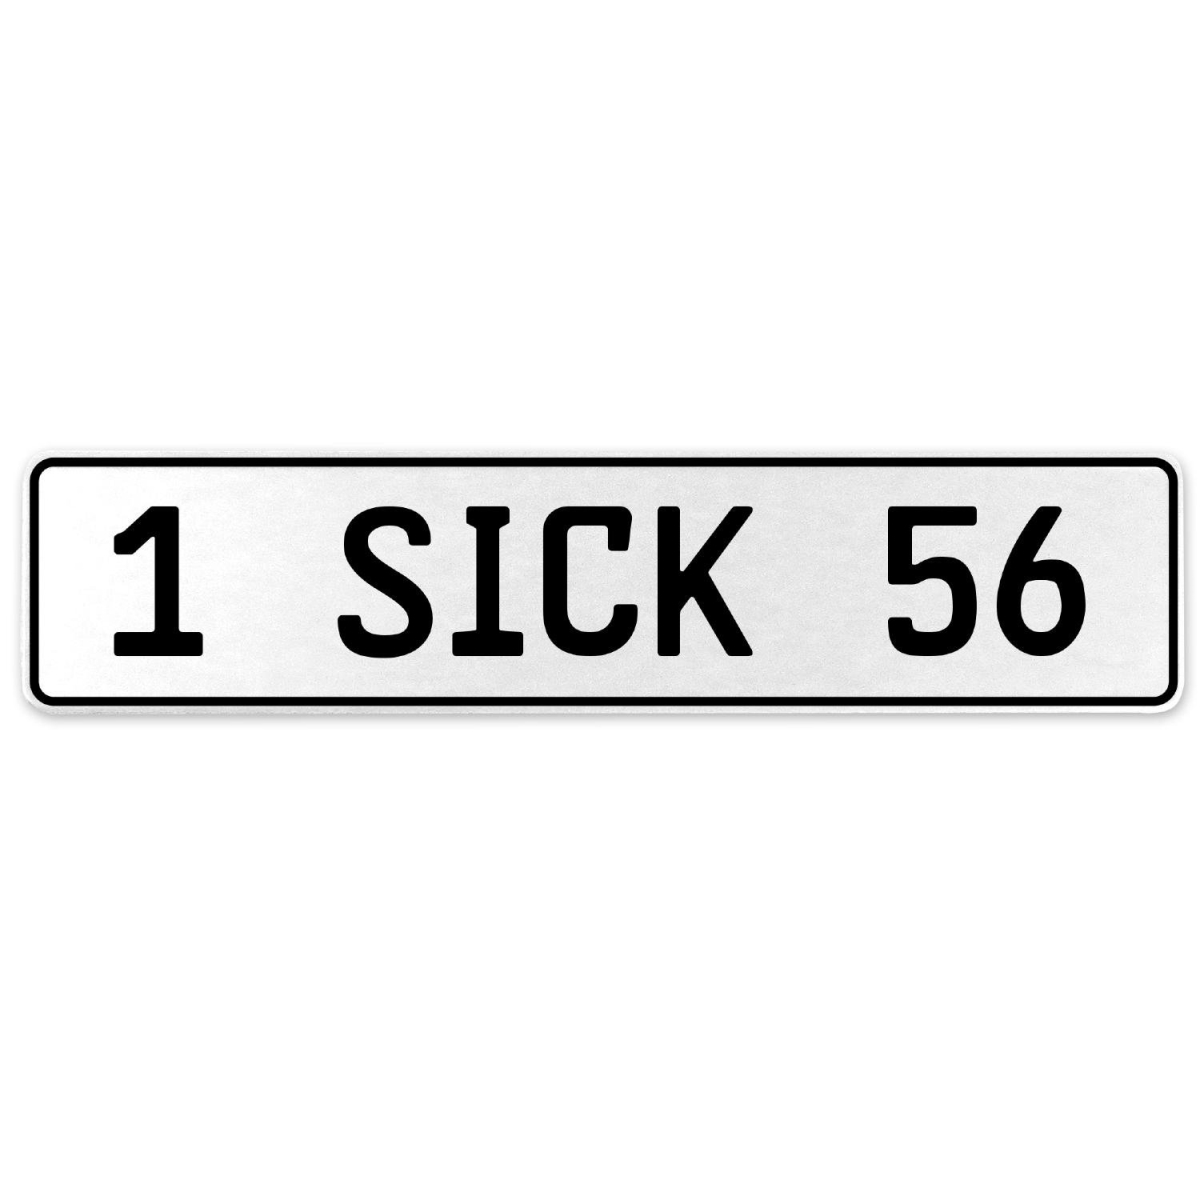 554455 1 Sick 56 - White Aluminum Street Sign Mancave Euro Plate Name Door Sign Wall